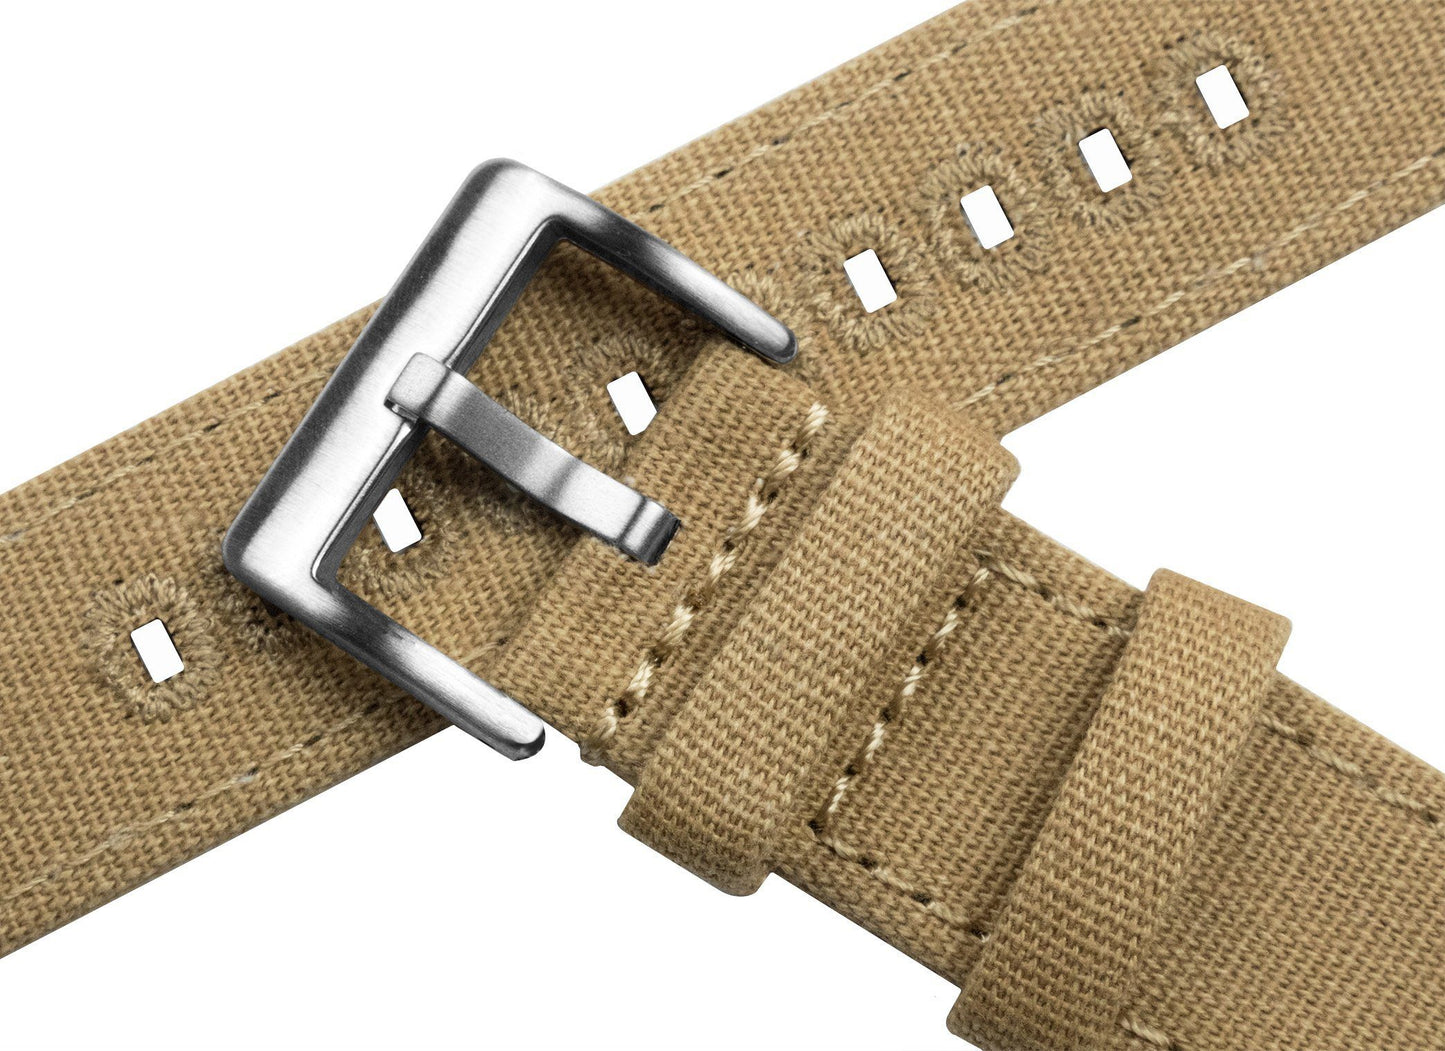 Apple Watch | Khaki Canvas - Barton Watch Bands